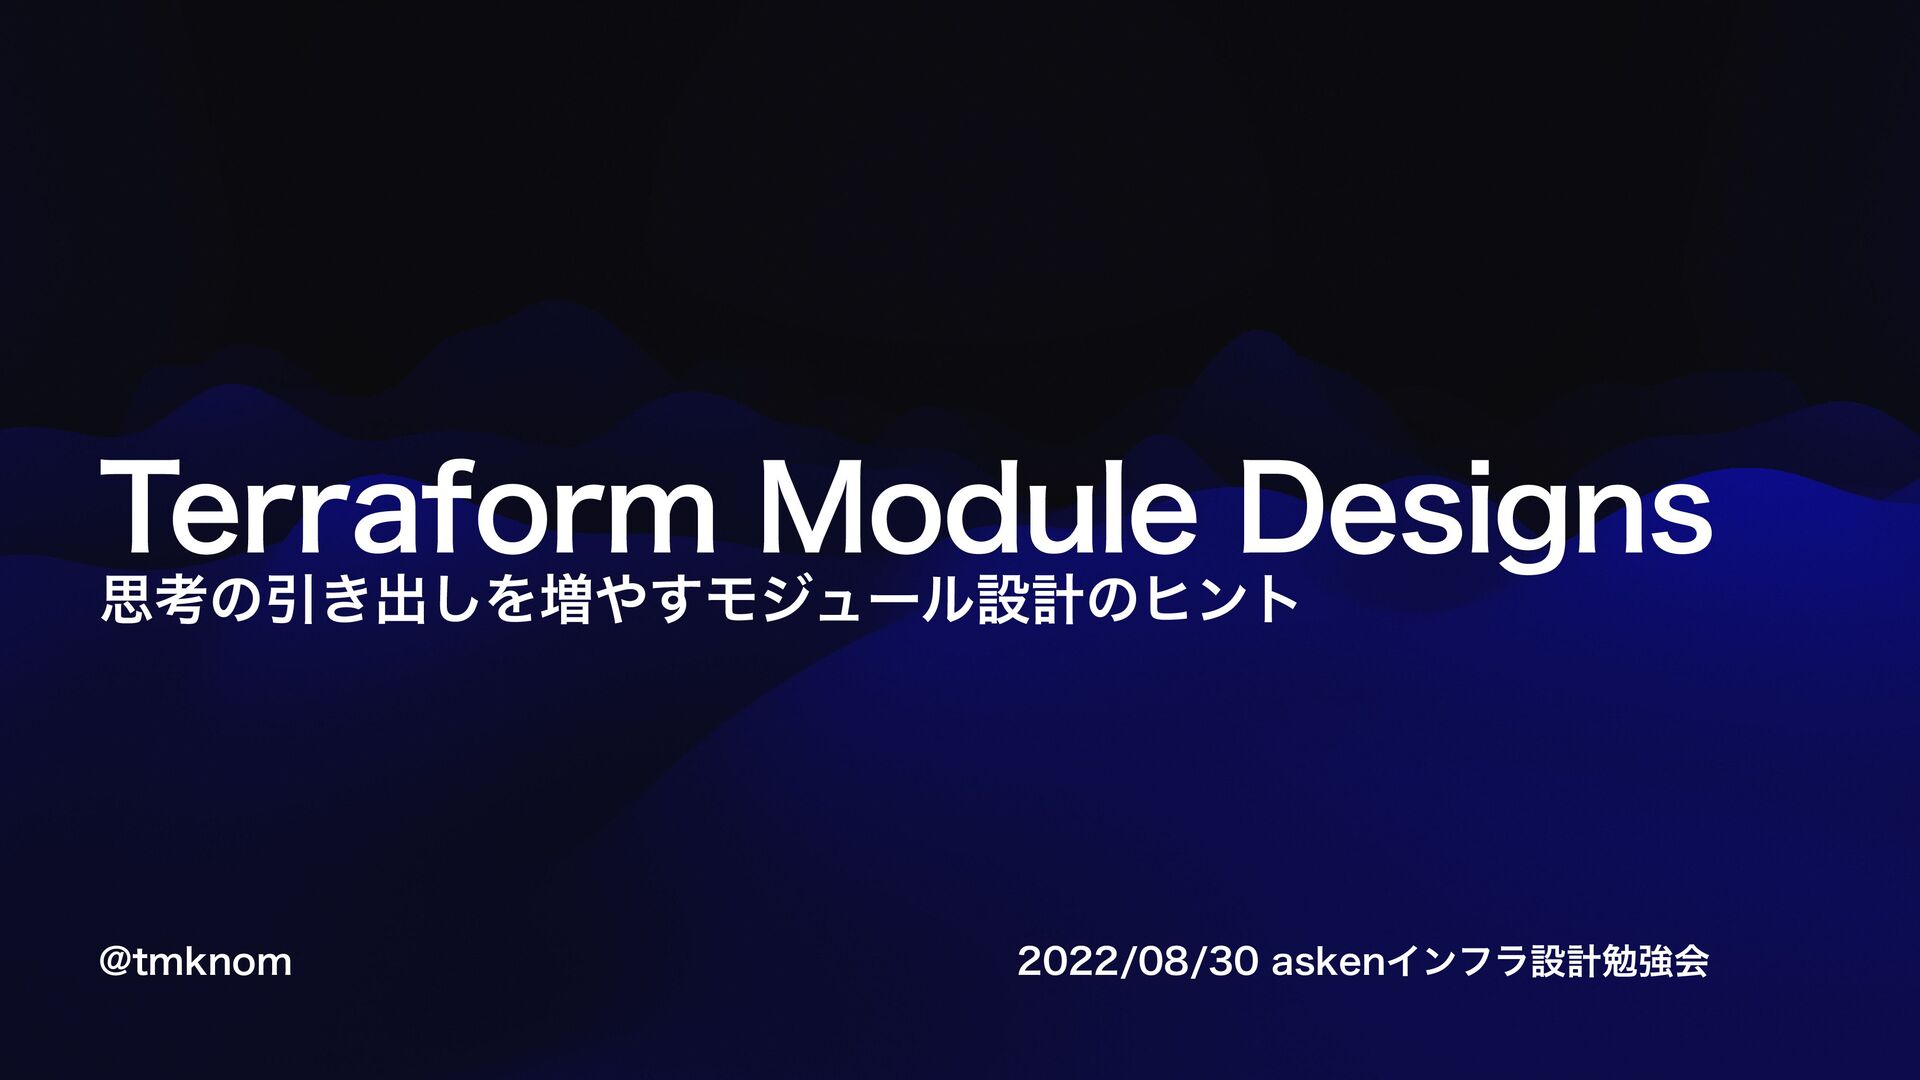 Terraform Module Designs - Speaker Deck